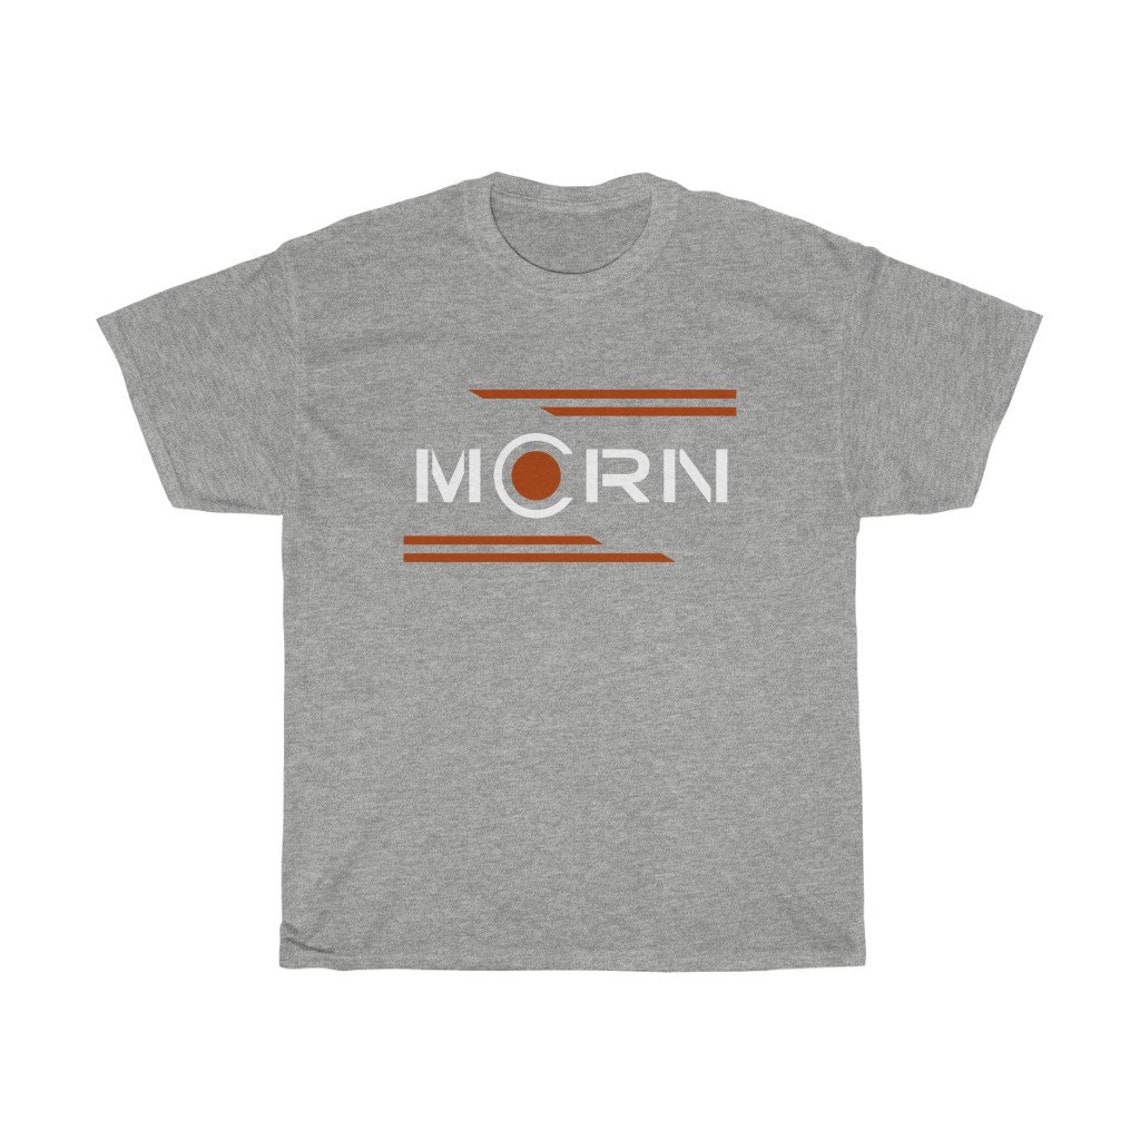 MCRN Standard Logo Design Classic T-Shirt for men and women | Etsy